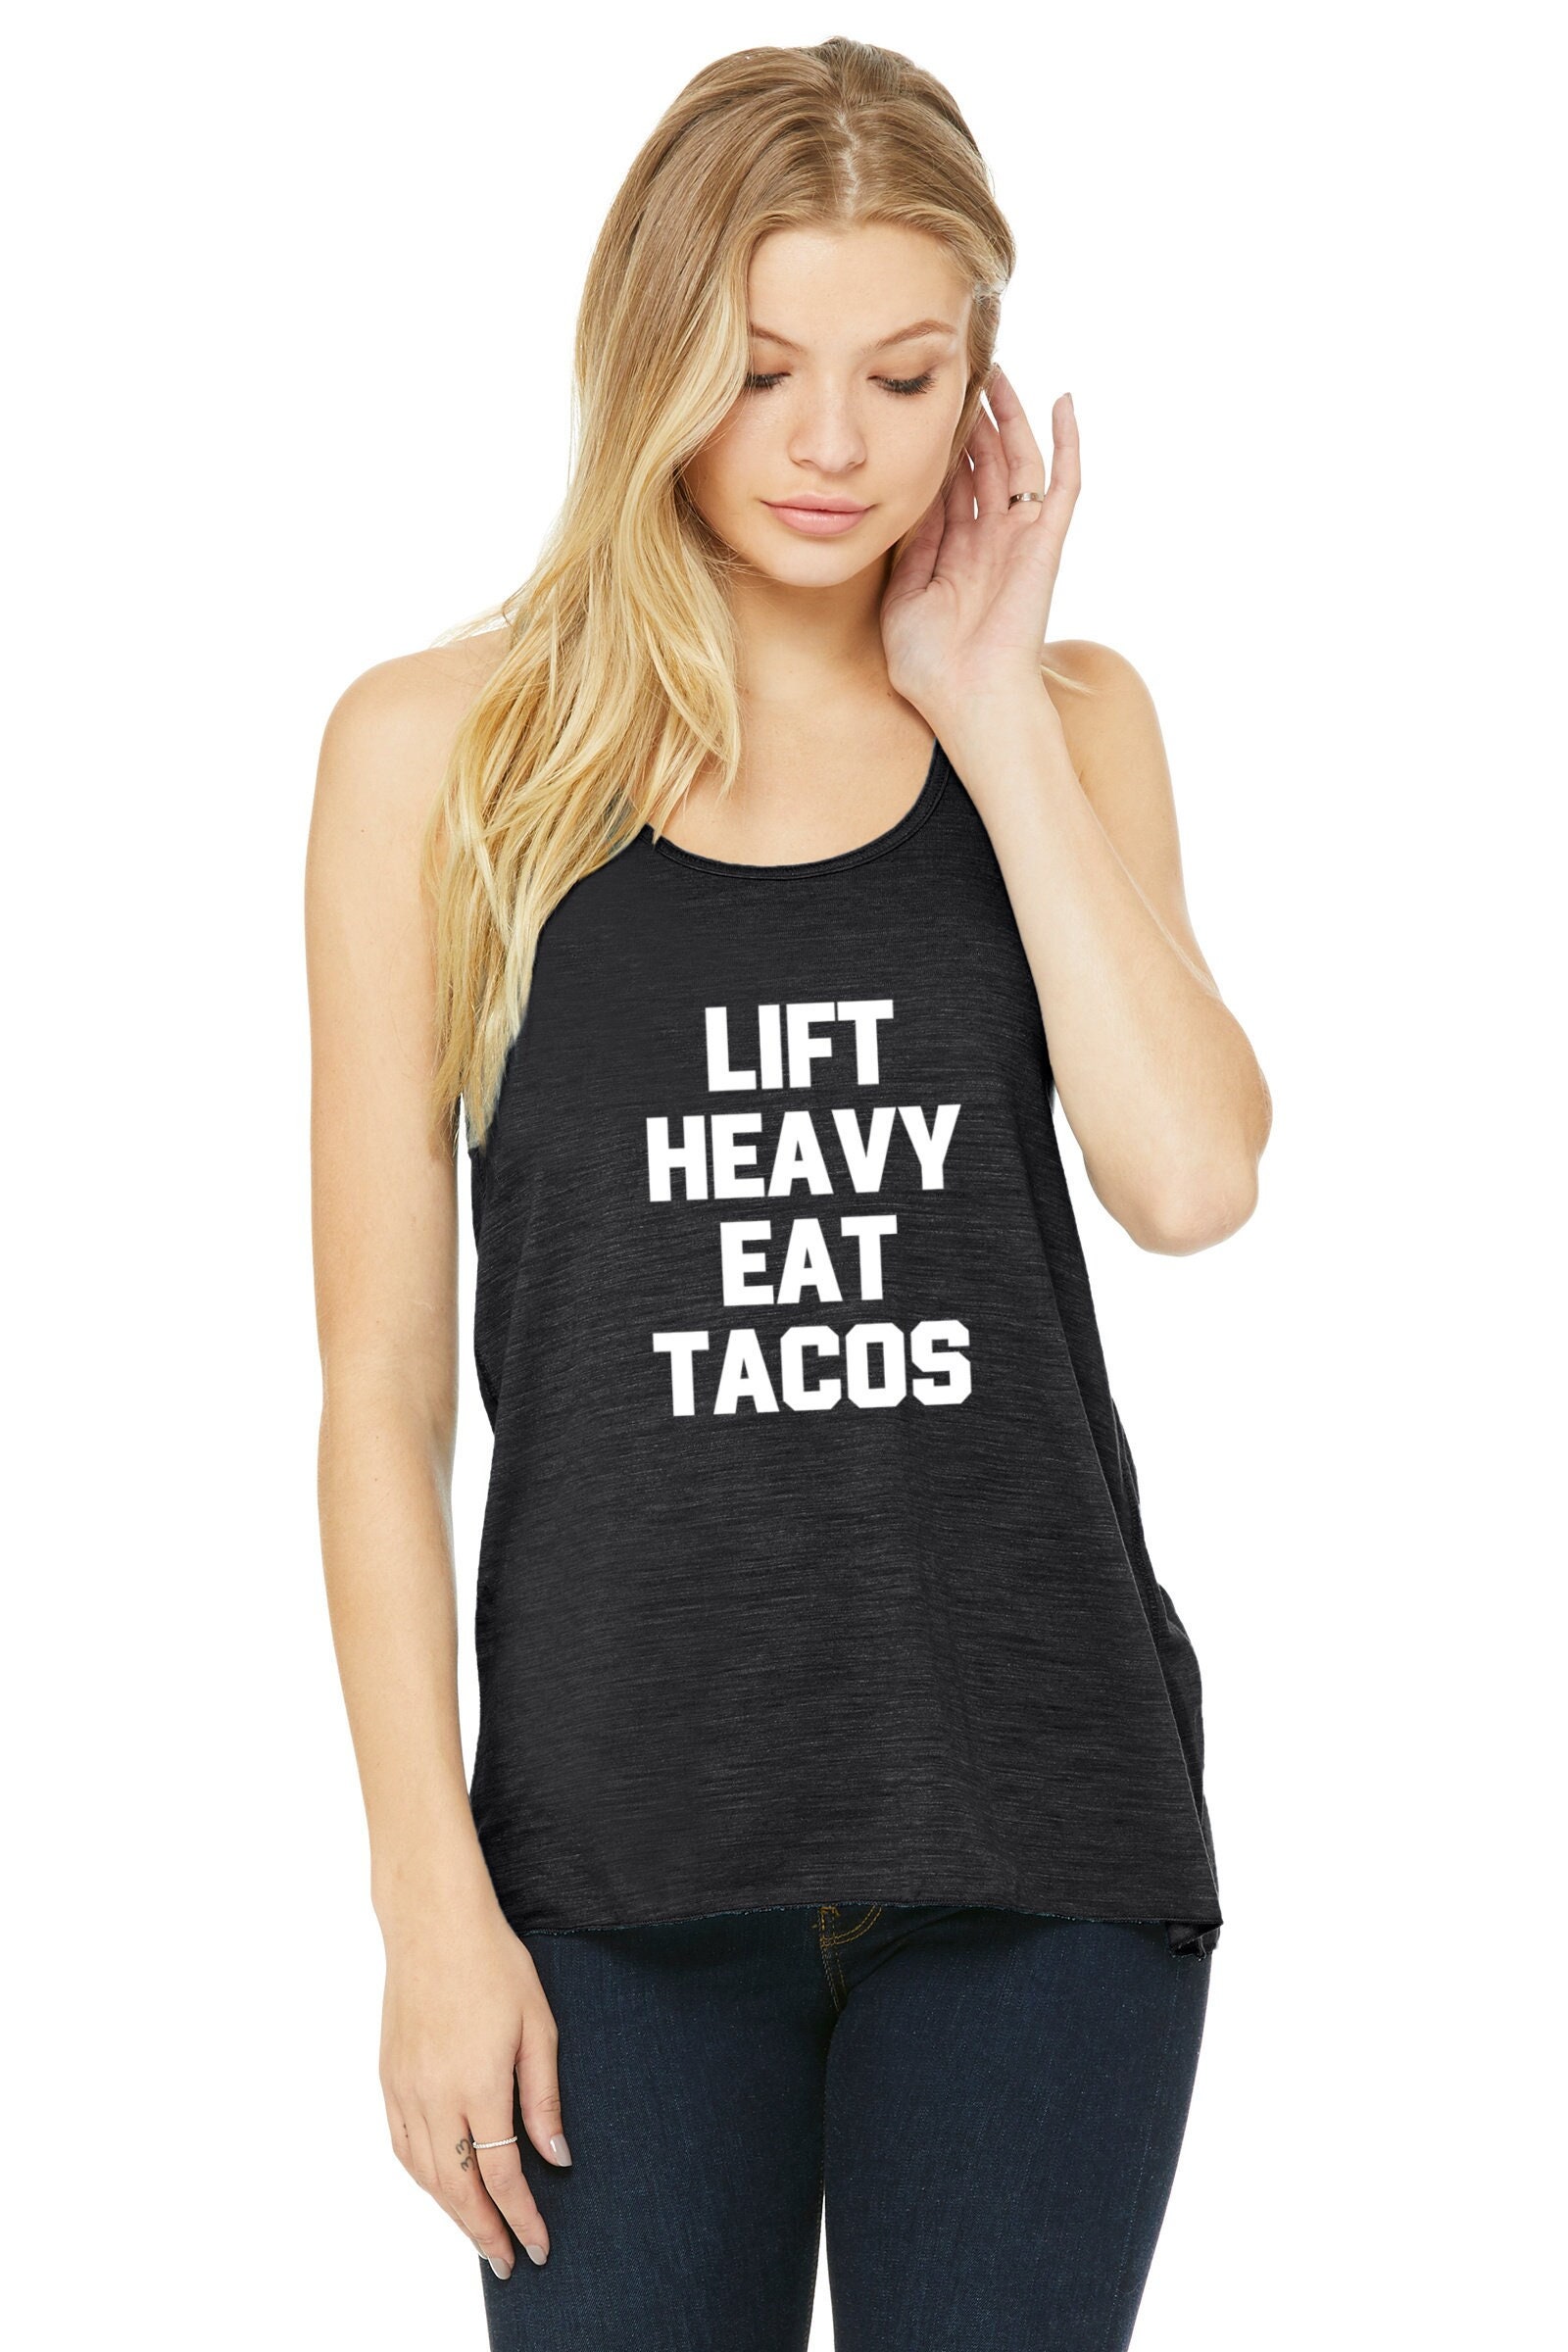 GymWeekendApparel Lifting Shirt | Women's Lifting Tank | Weightlifting Shirt | Funny Gym Shirt | Lifting Tank Top | Lift Heavy Eat Tacos